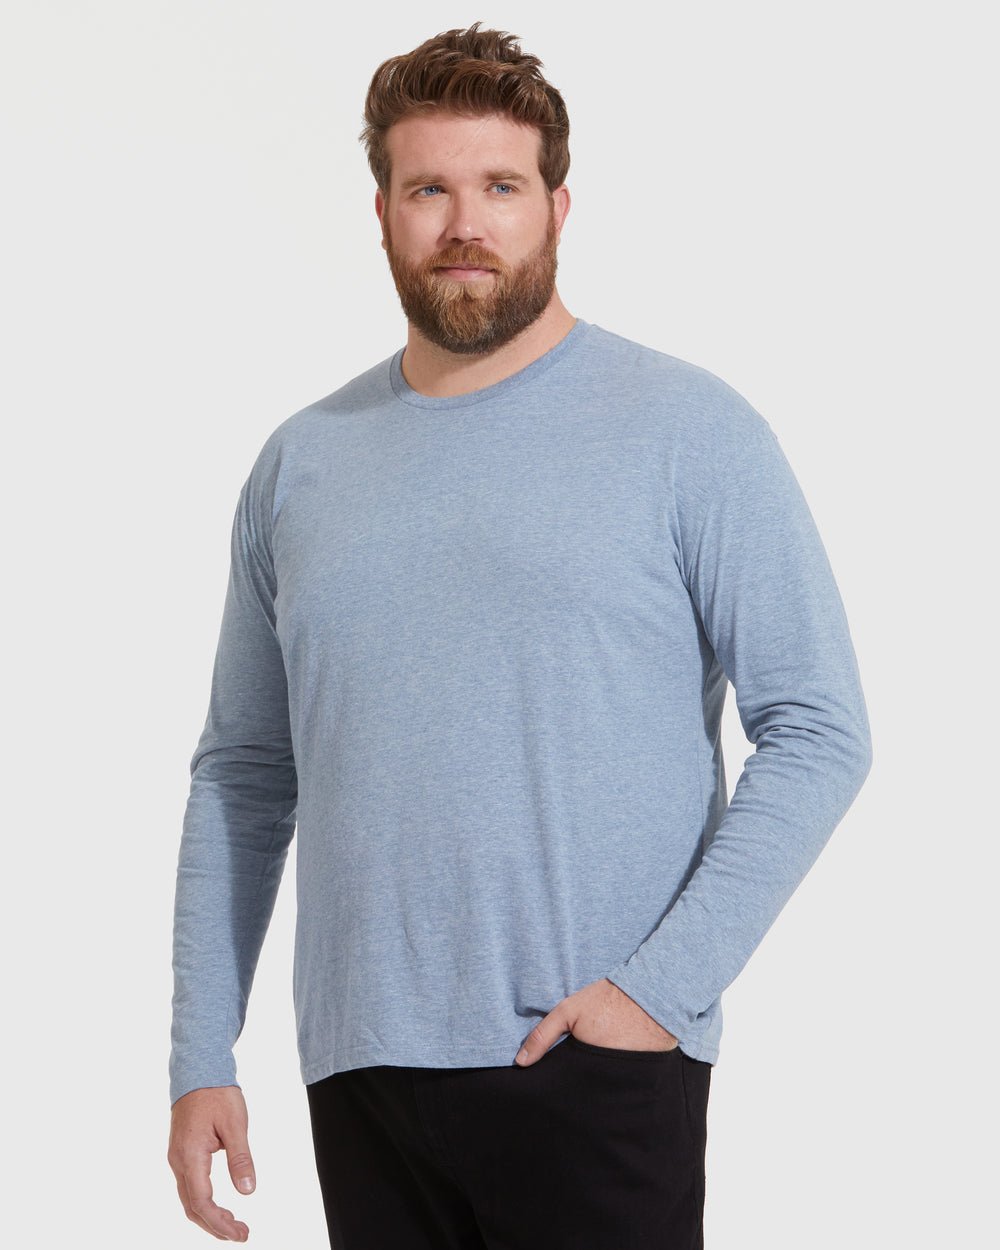 Lucky Brand Los Angeles True indigo Men's Blue Long Sleeve Shirt Sweater M